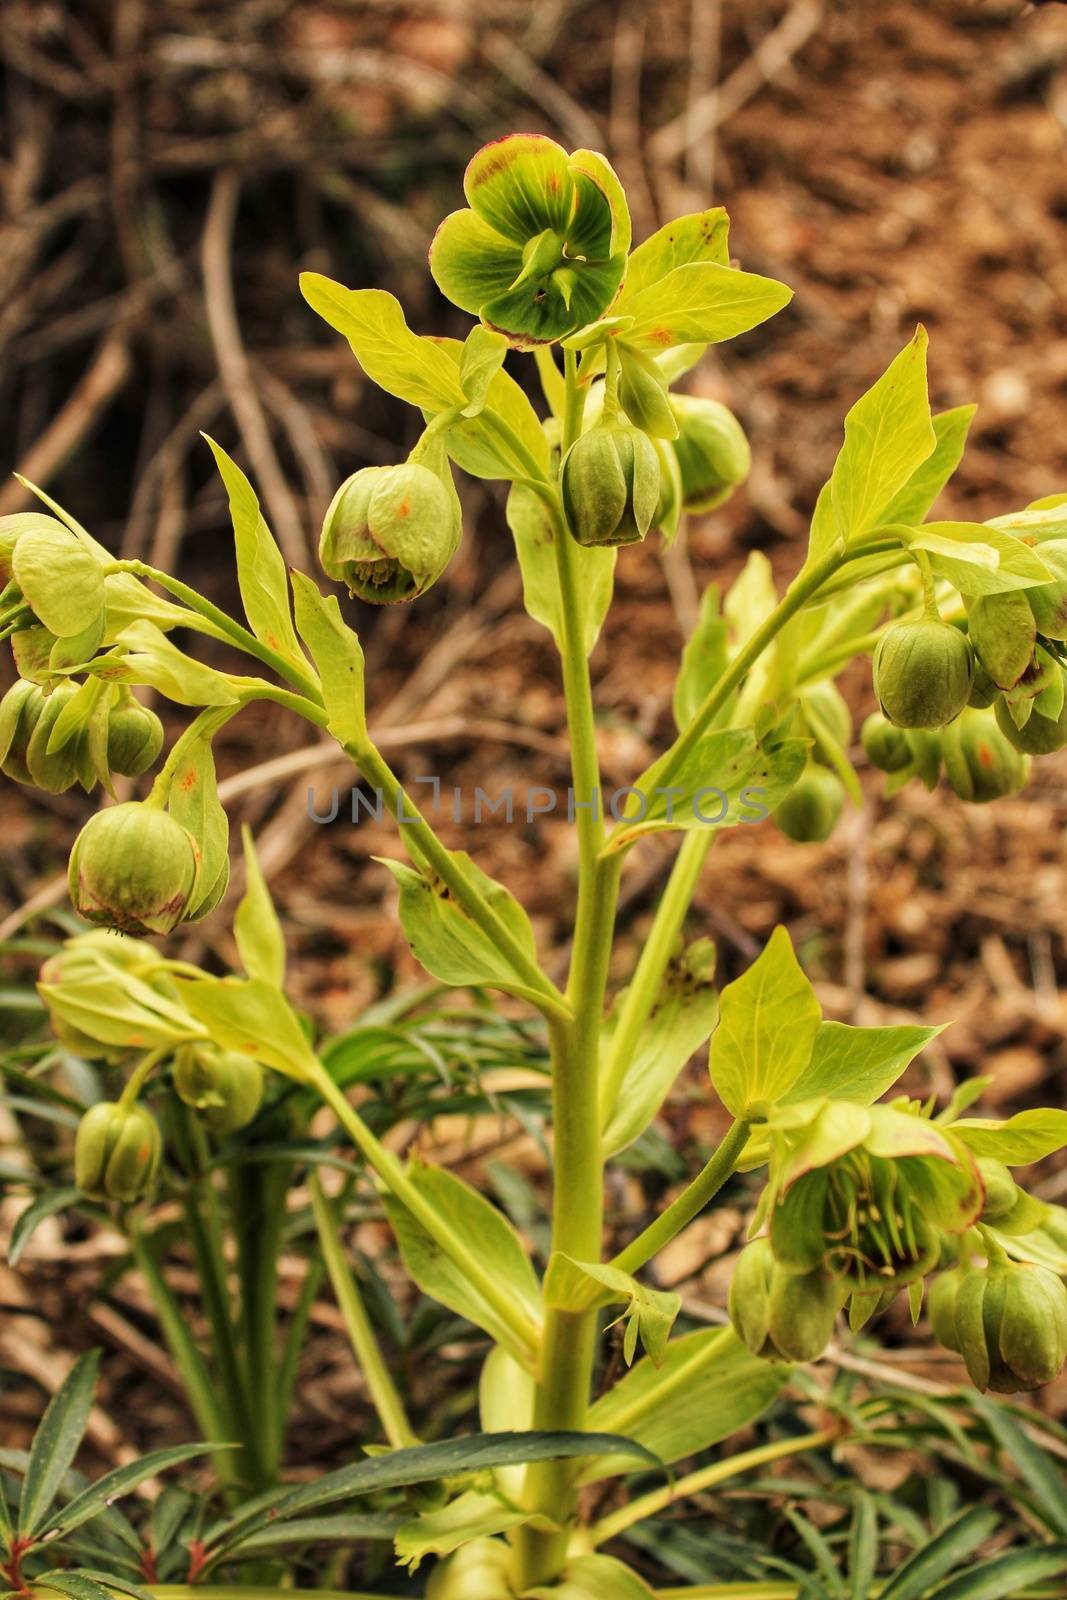 Helleborus Foetidus plant in the mountain by soniabonet